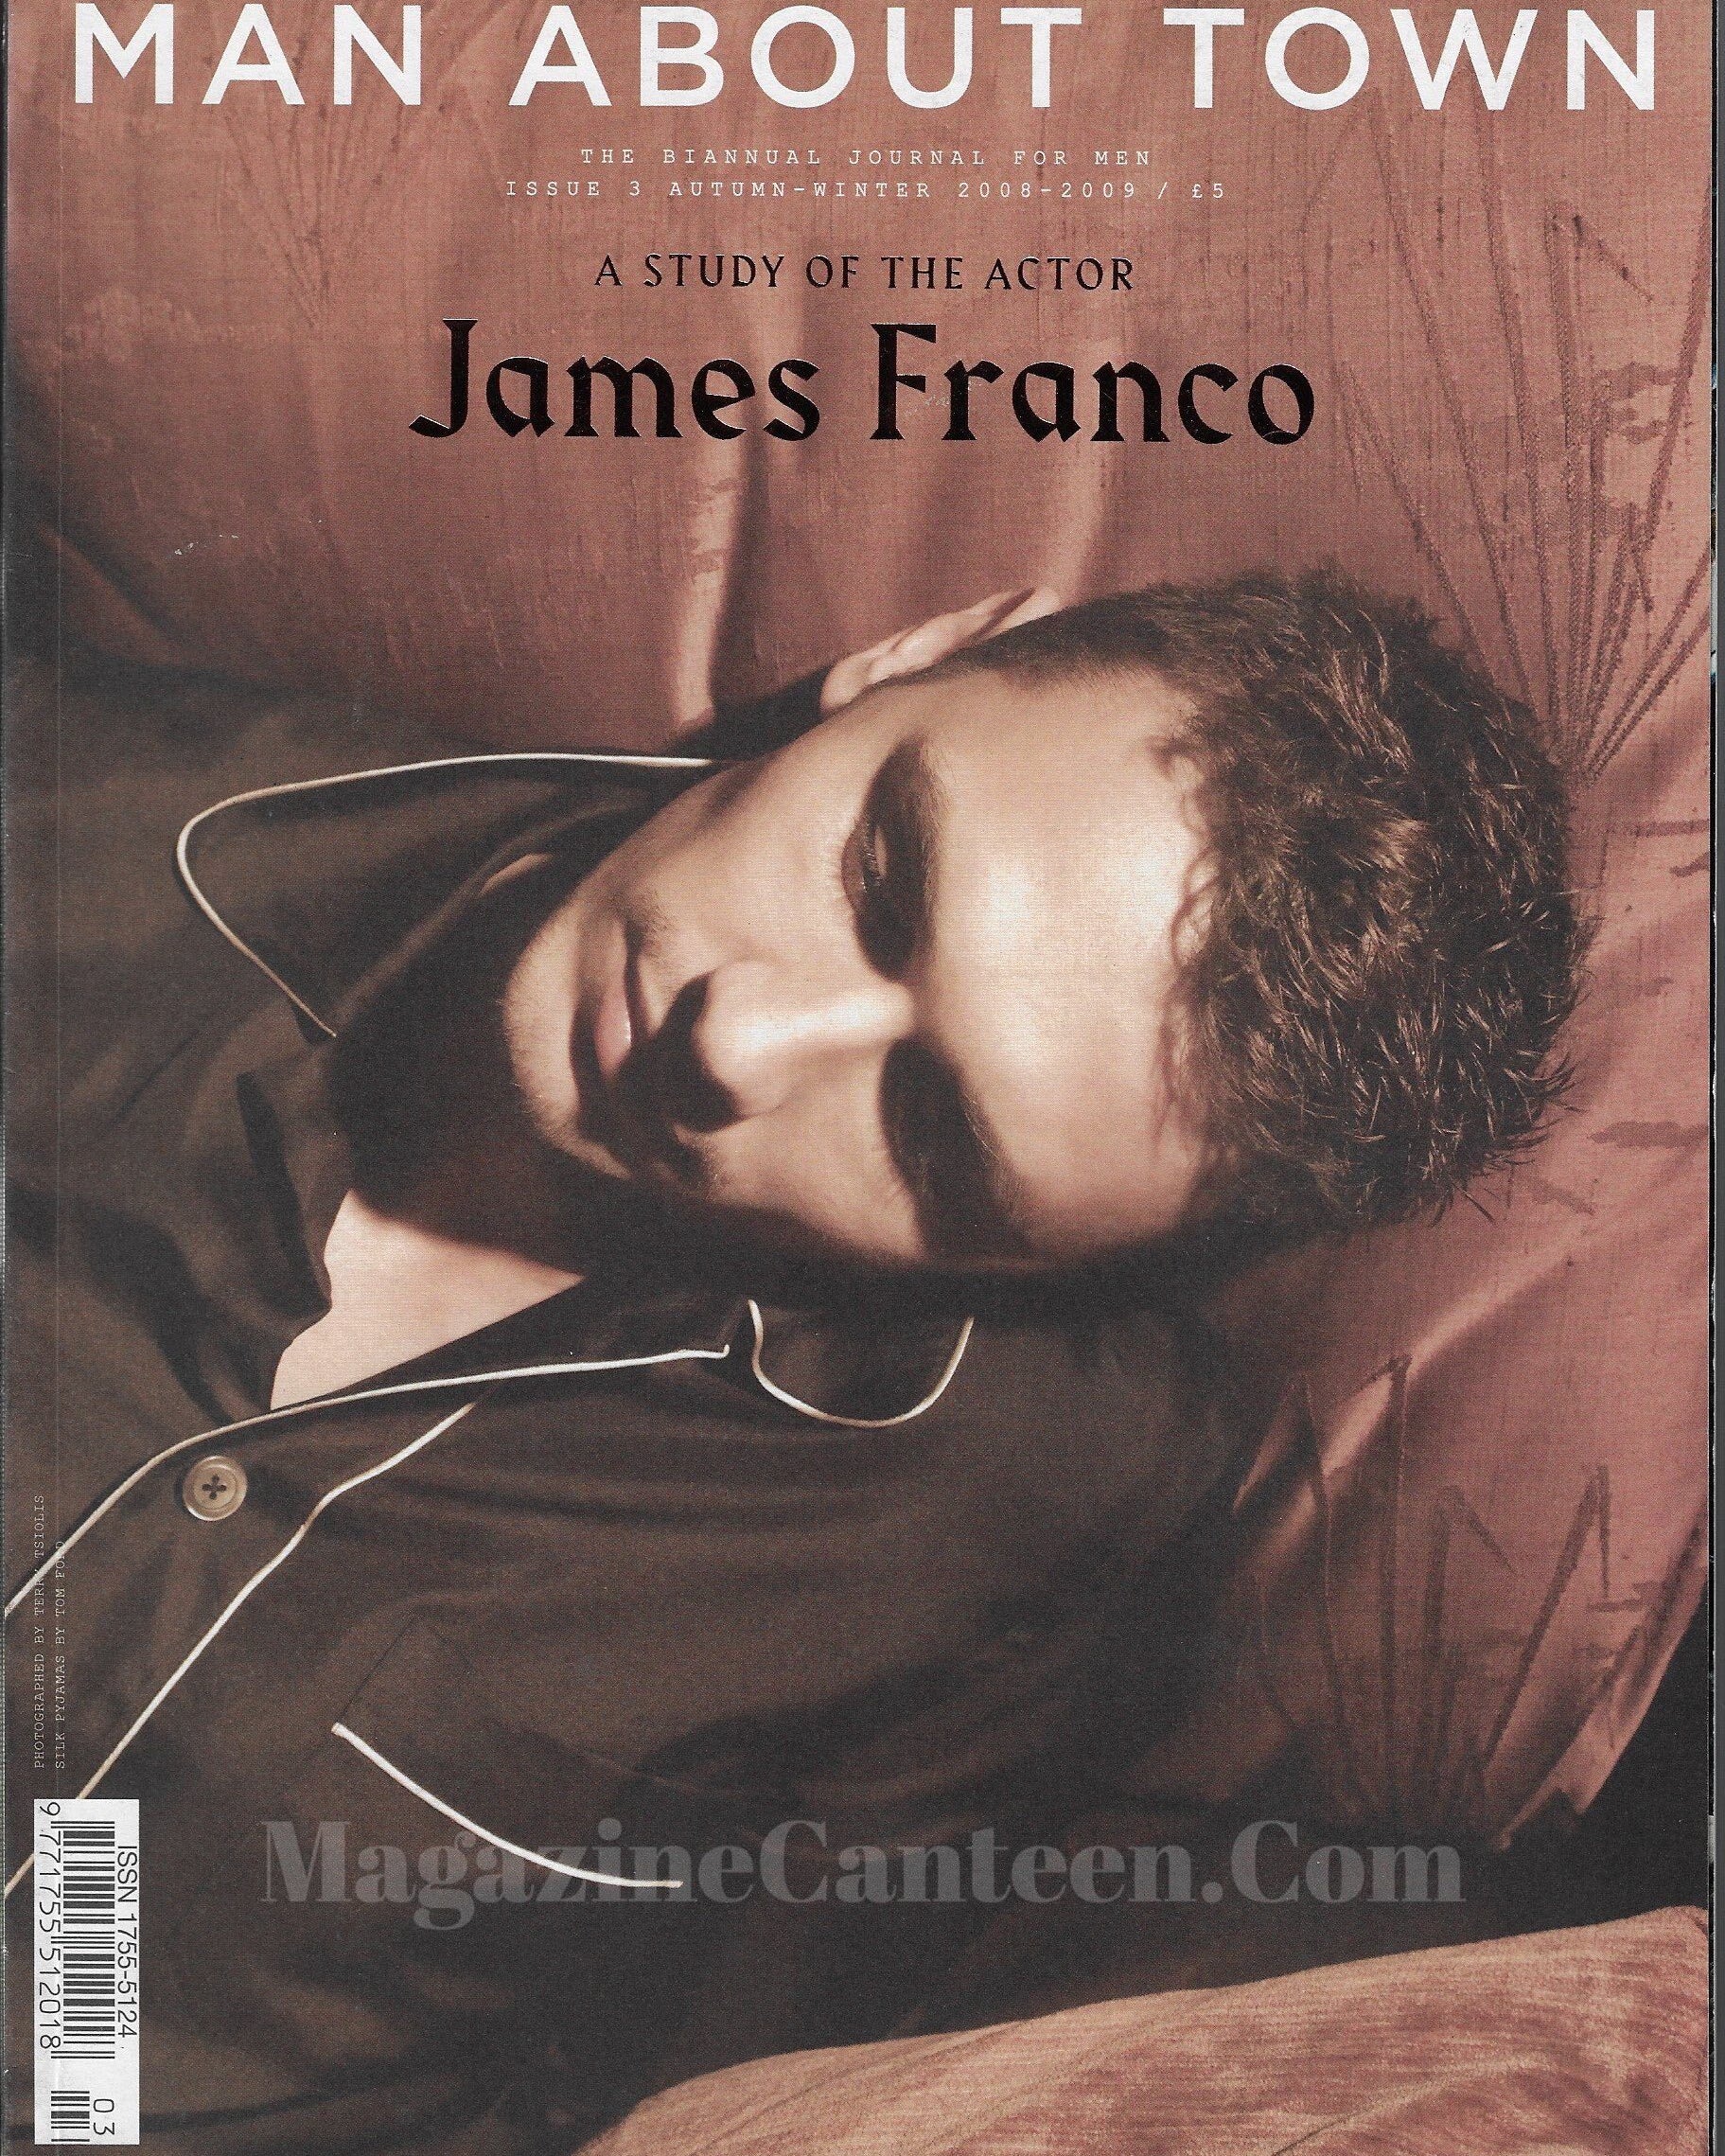 Man About Town Magazine - James Franco 2008